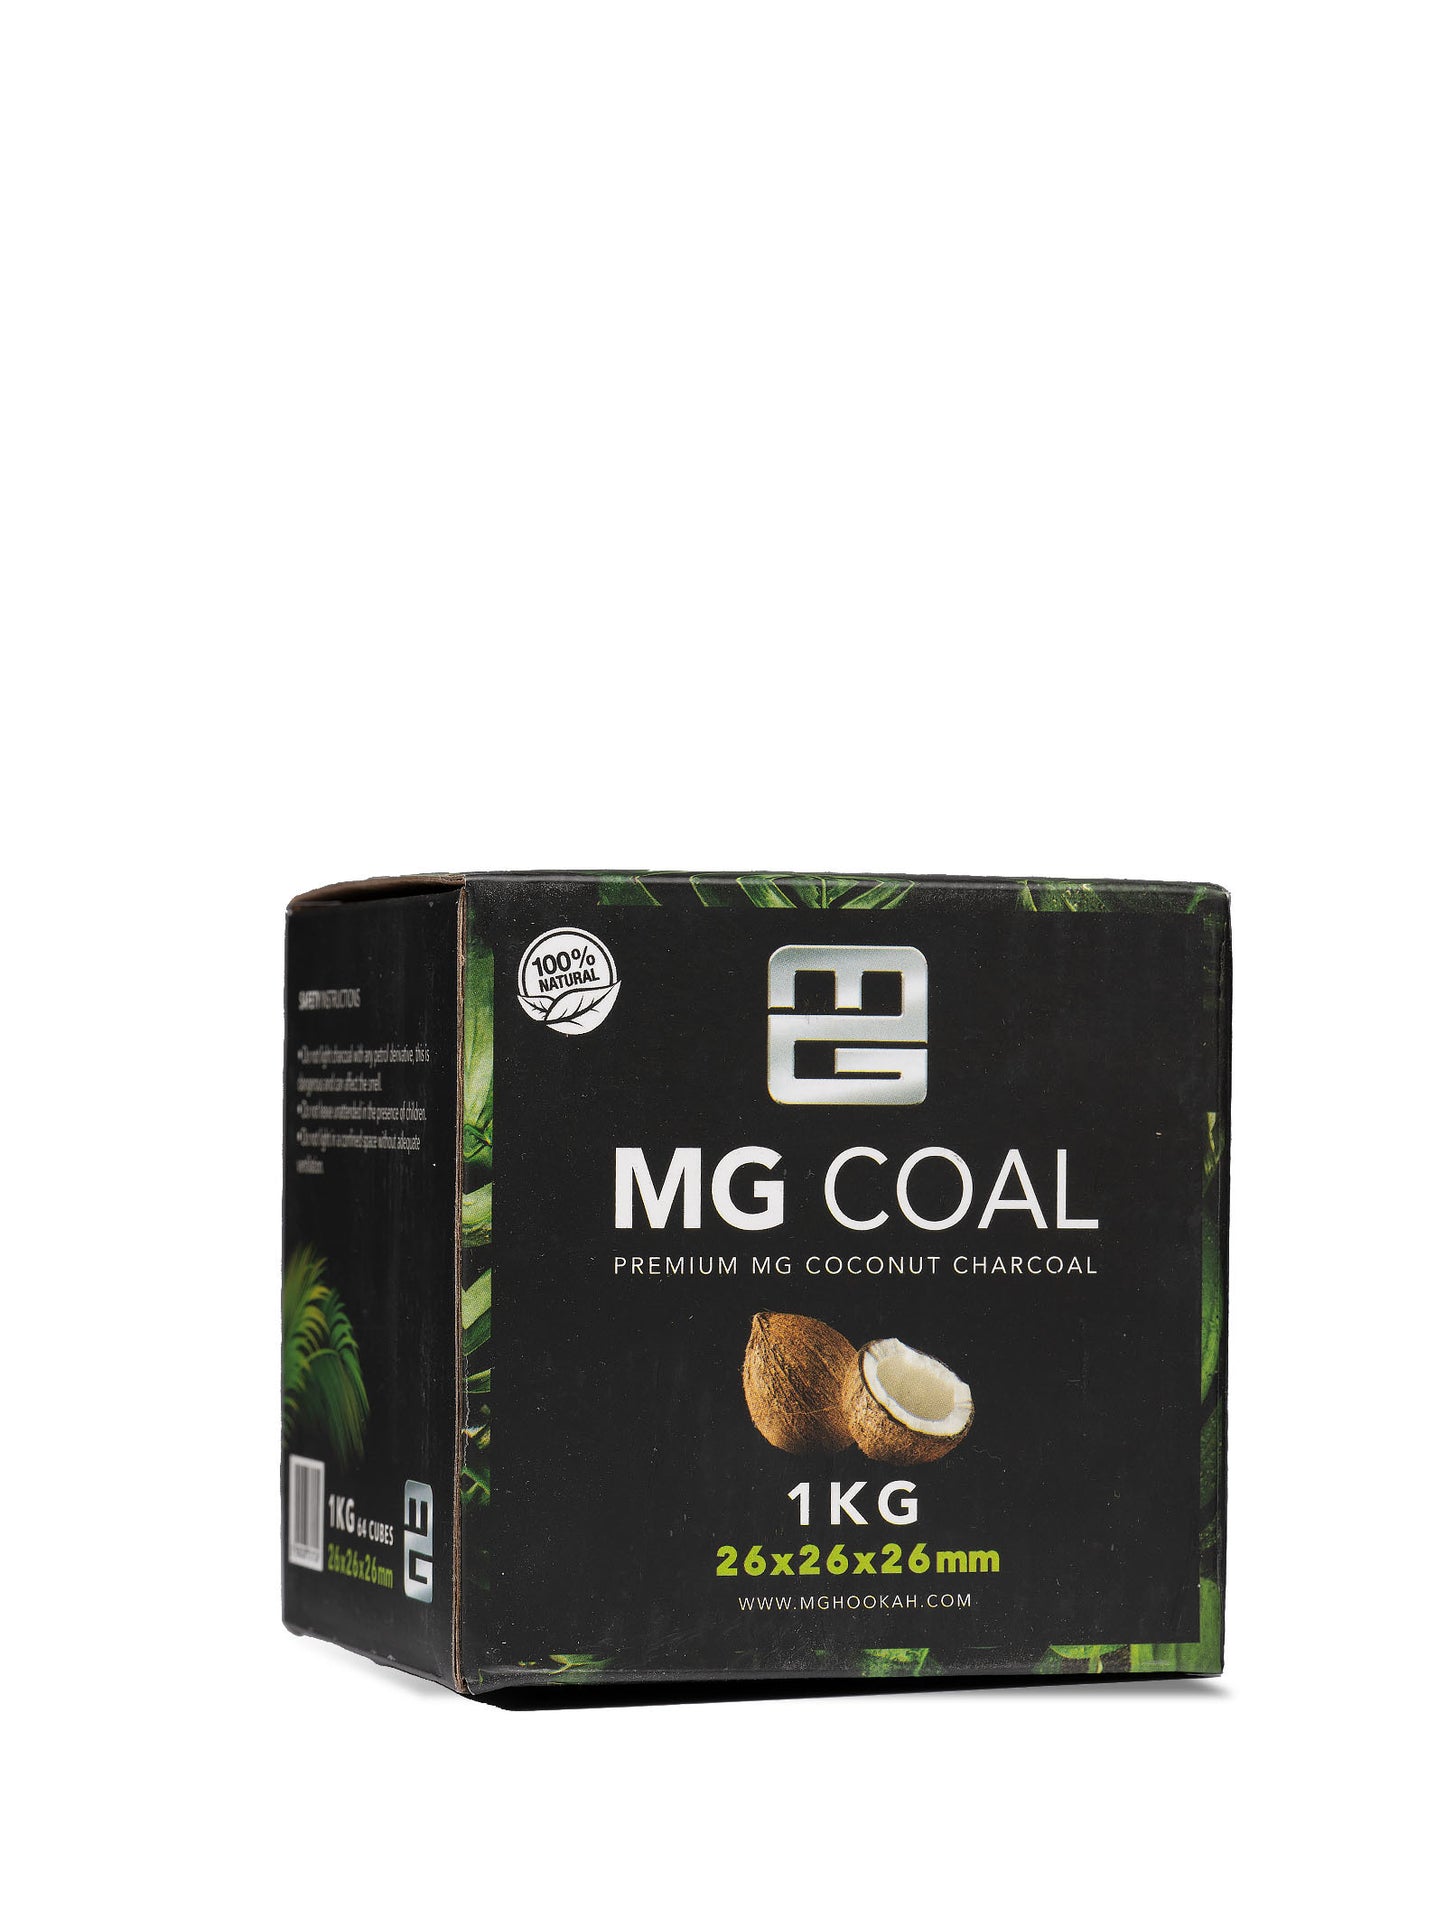 MG Coal Premium 26mm Coconut Charcoal 1kg - 64 Pieces